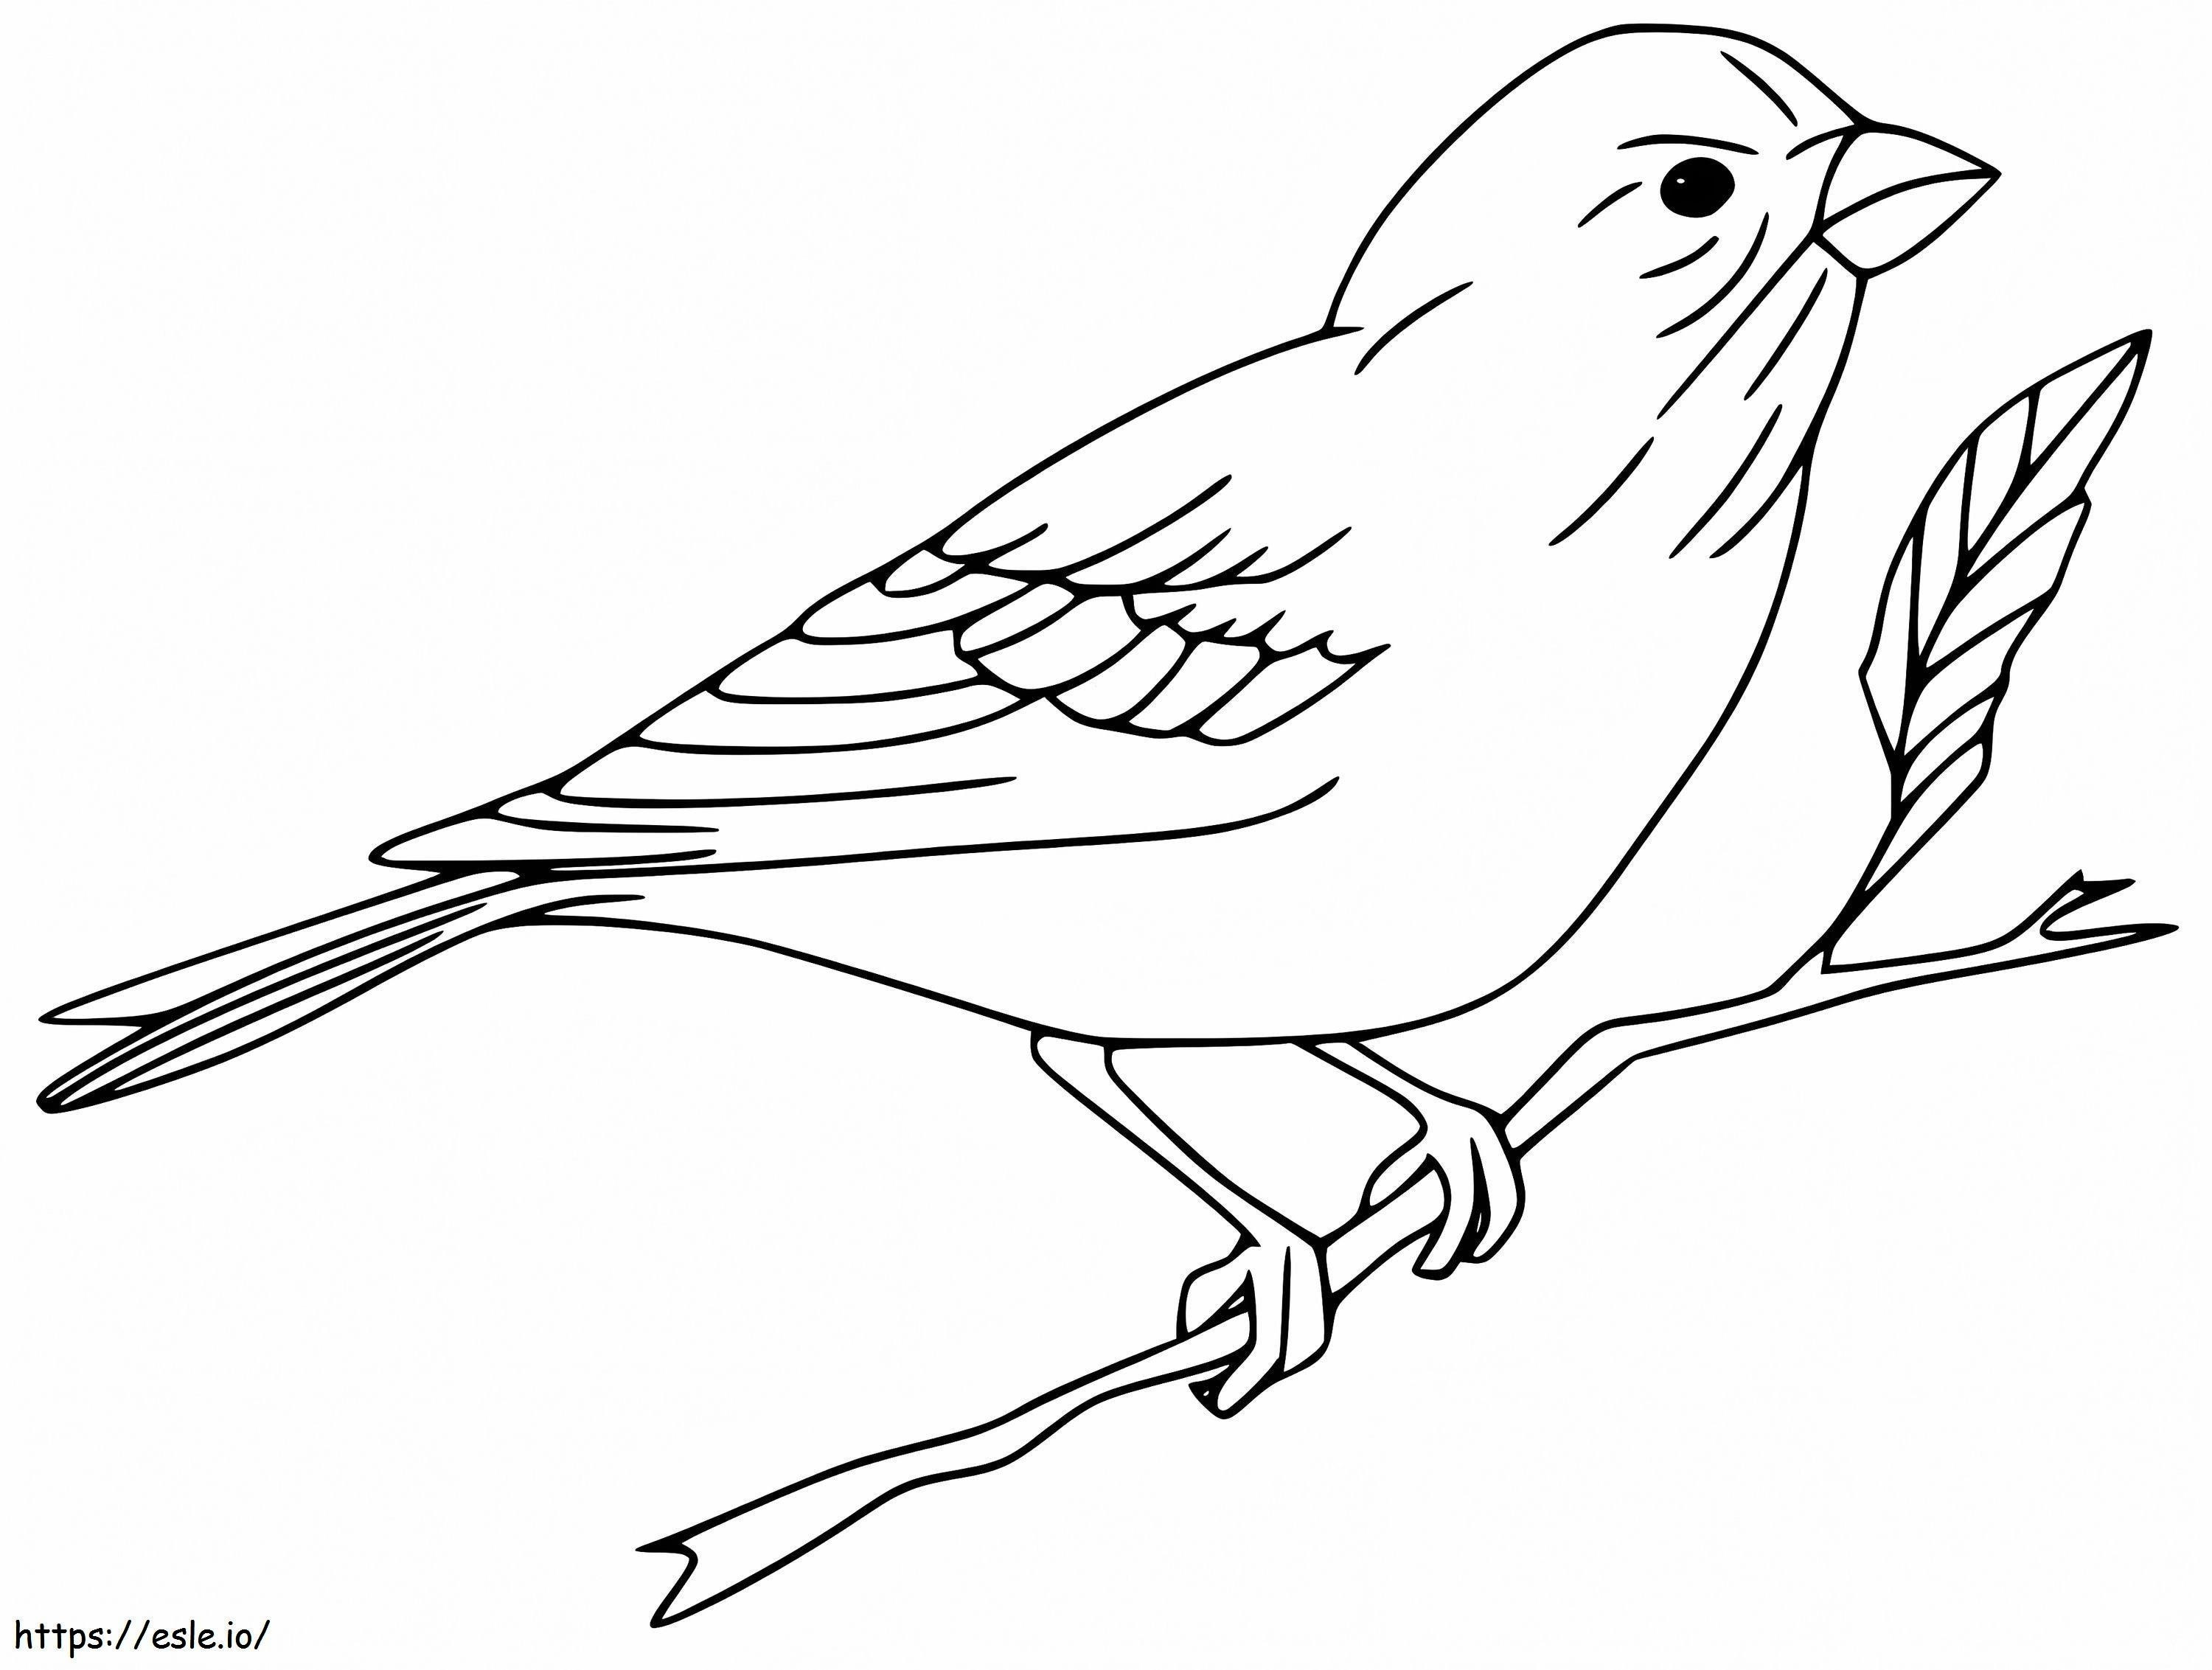 Sparrow 1 coloring page